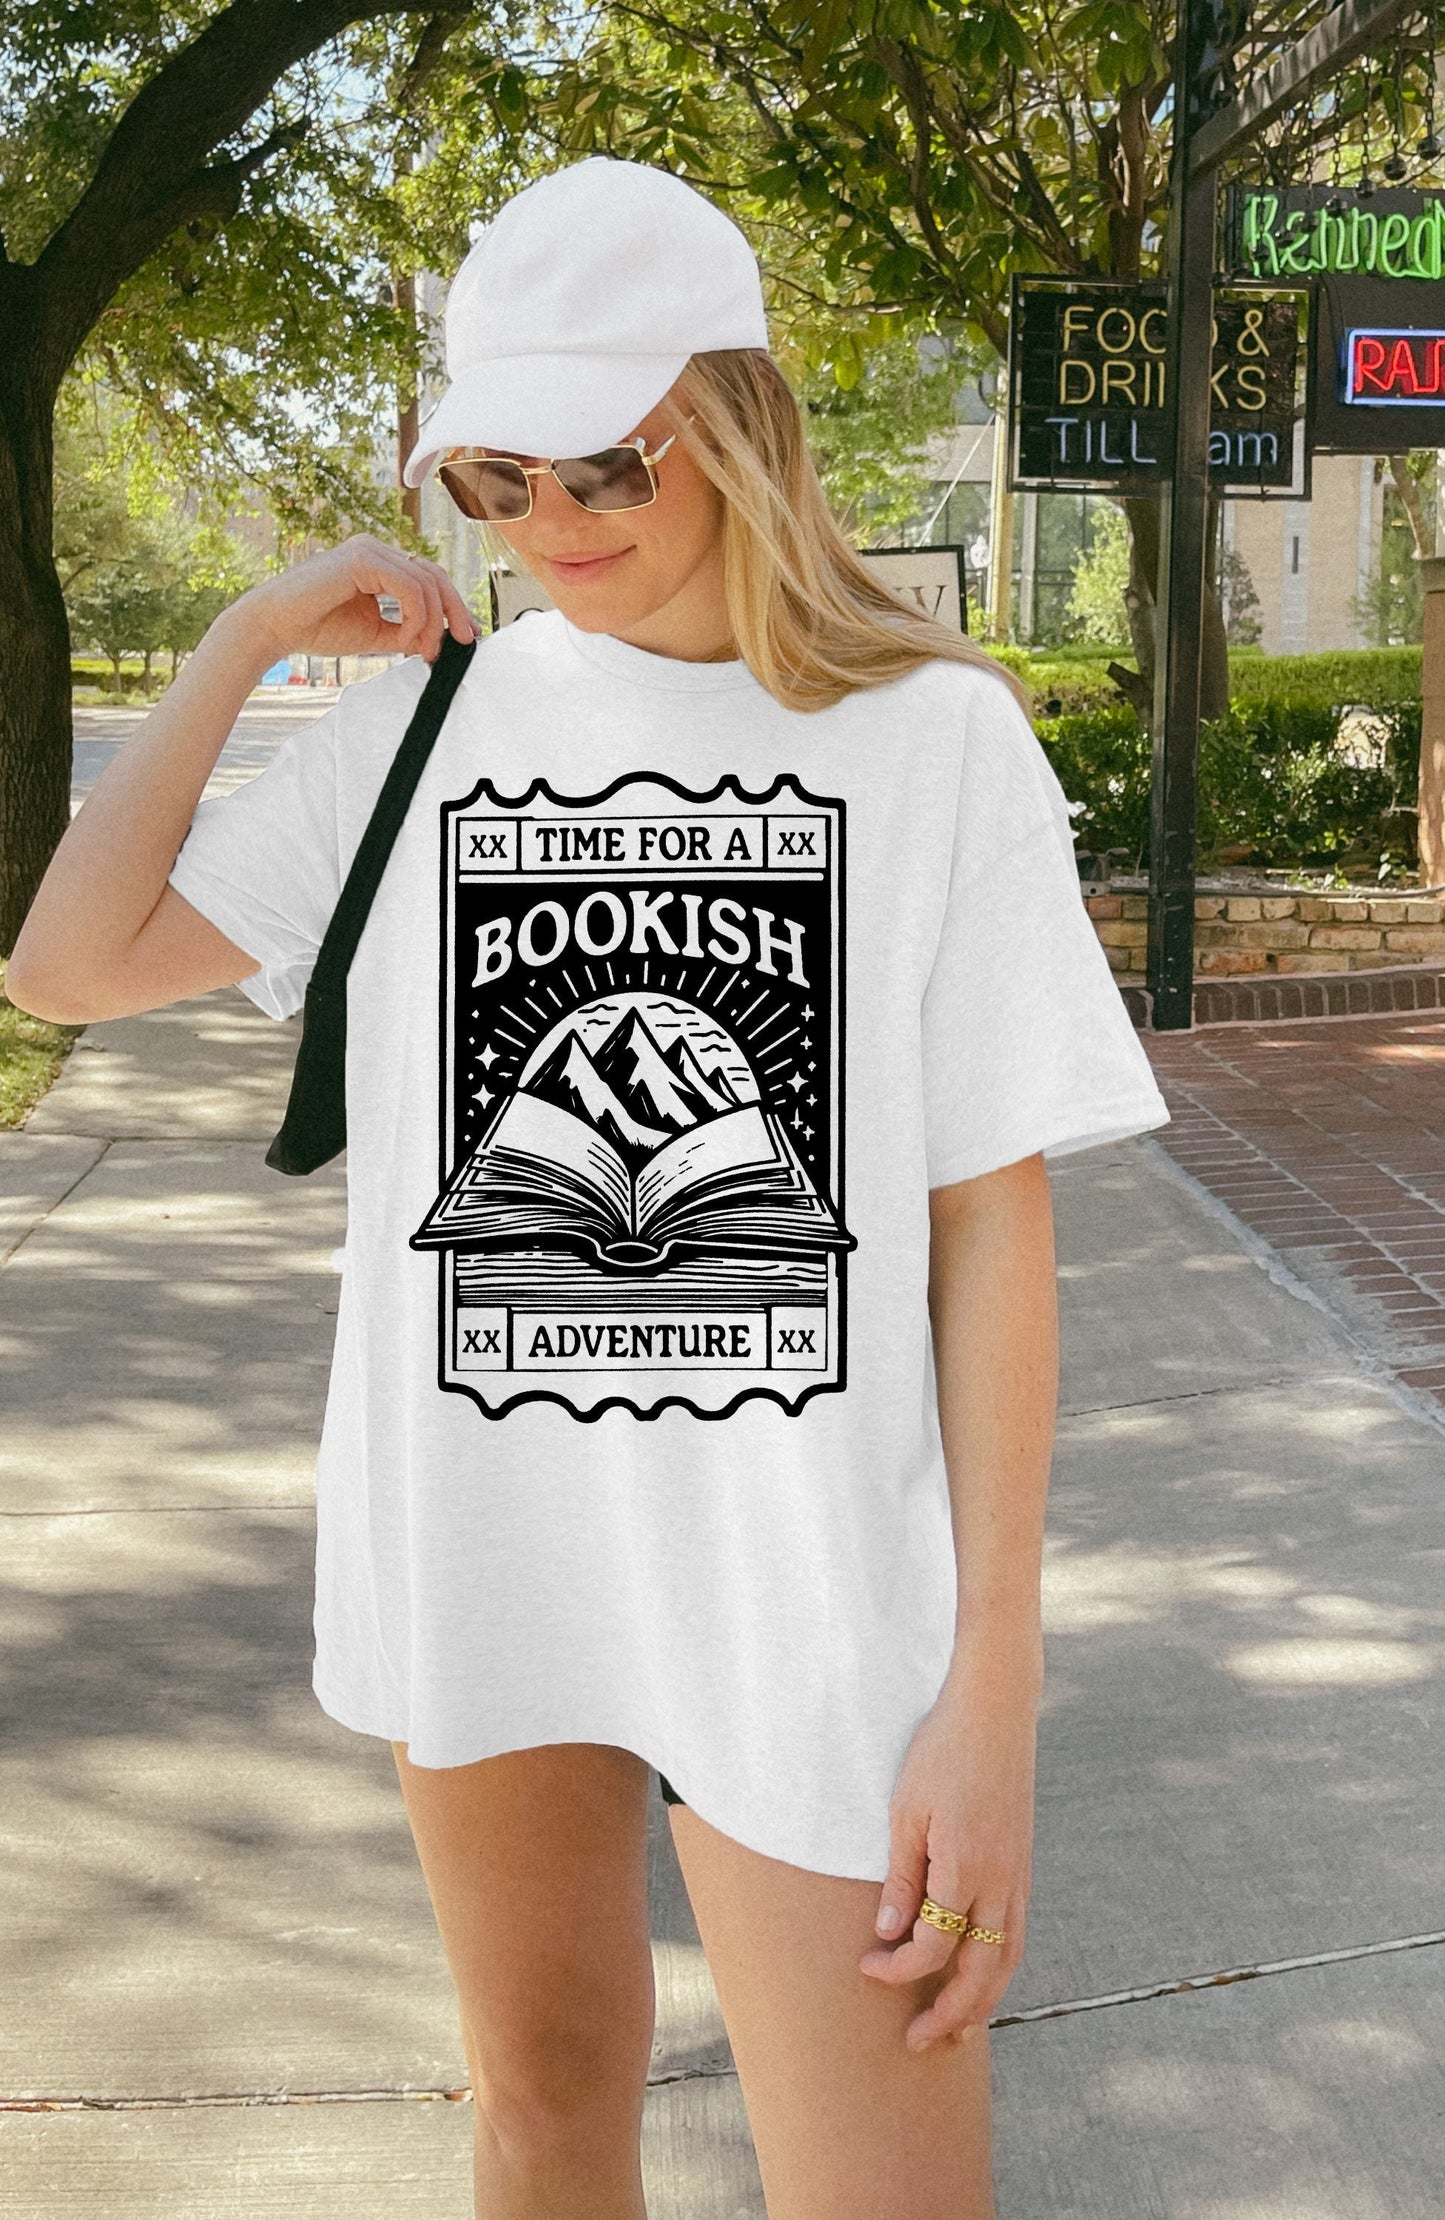 Time for a Bookish Adventure Shirt Book shirt Book Lover Tshirt Women Reading Shirts Book Club Shirt book shirt Book gift